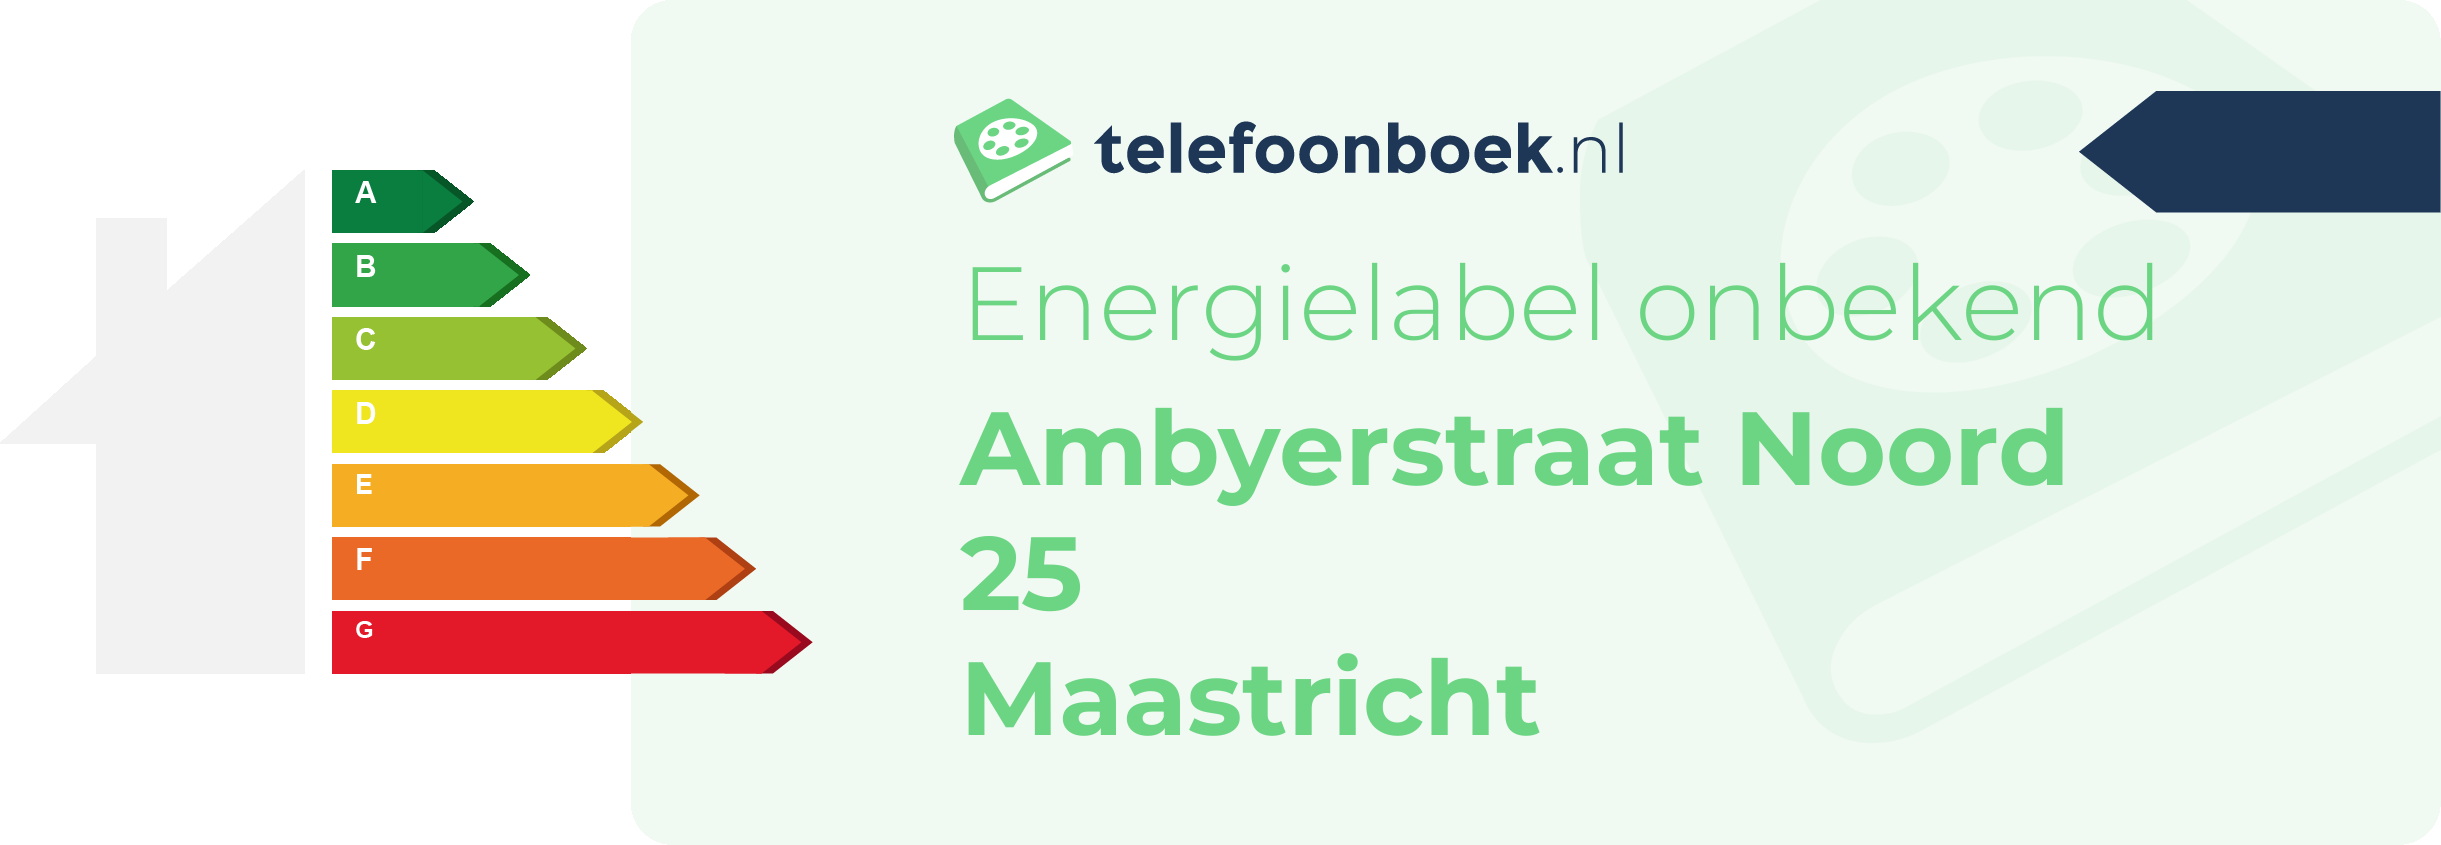 Energielabel Ambyerstraat Noord 25 Maastricht